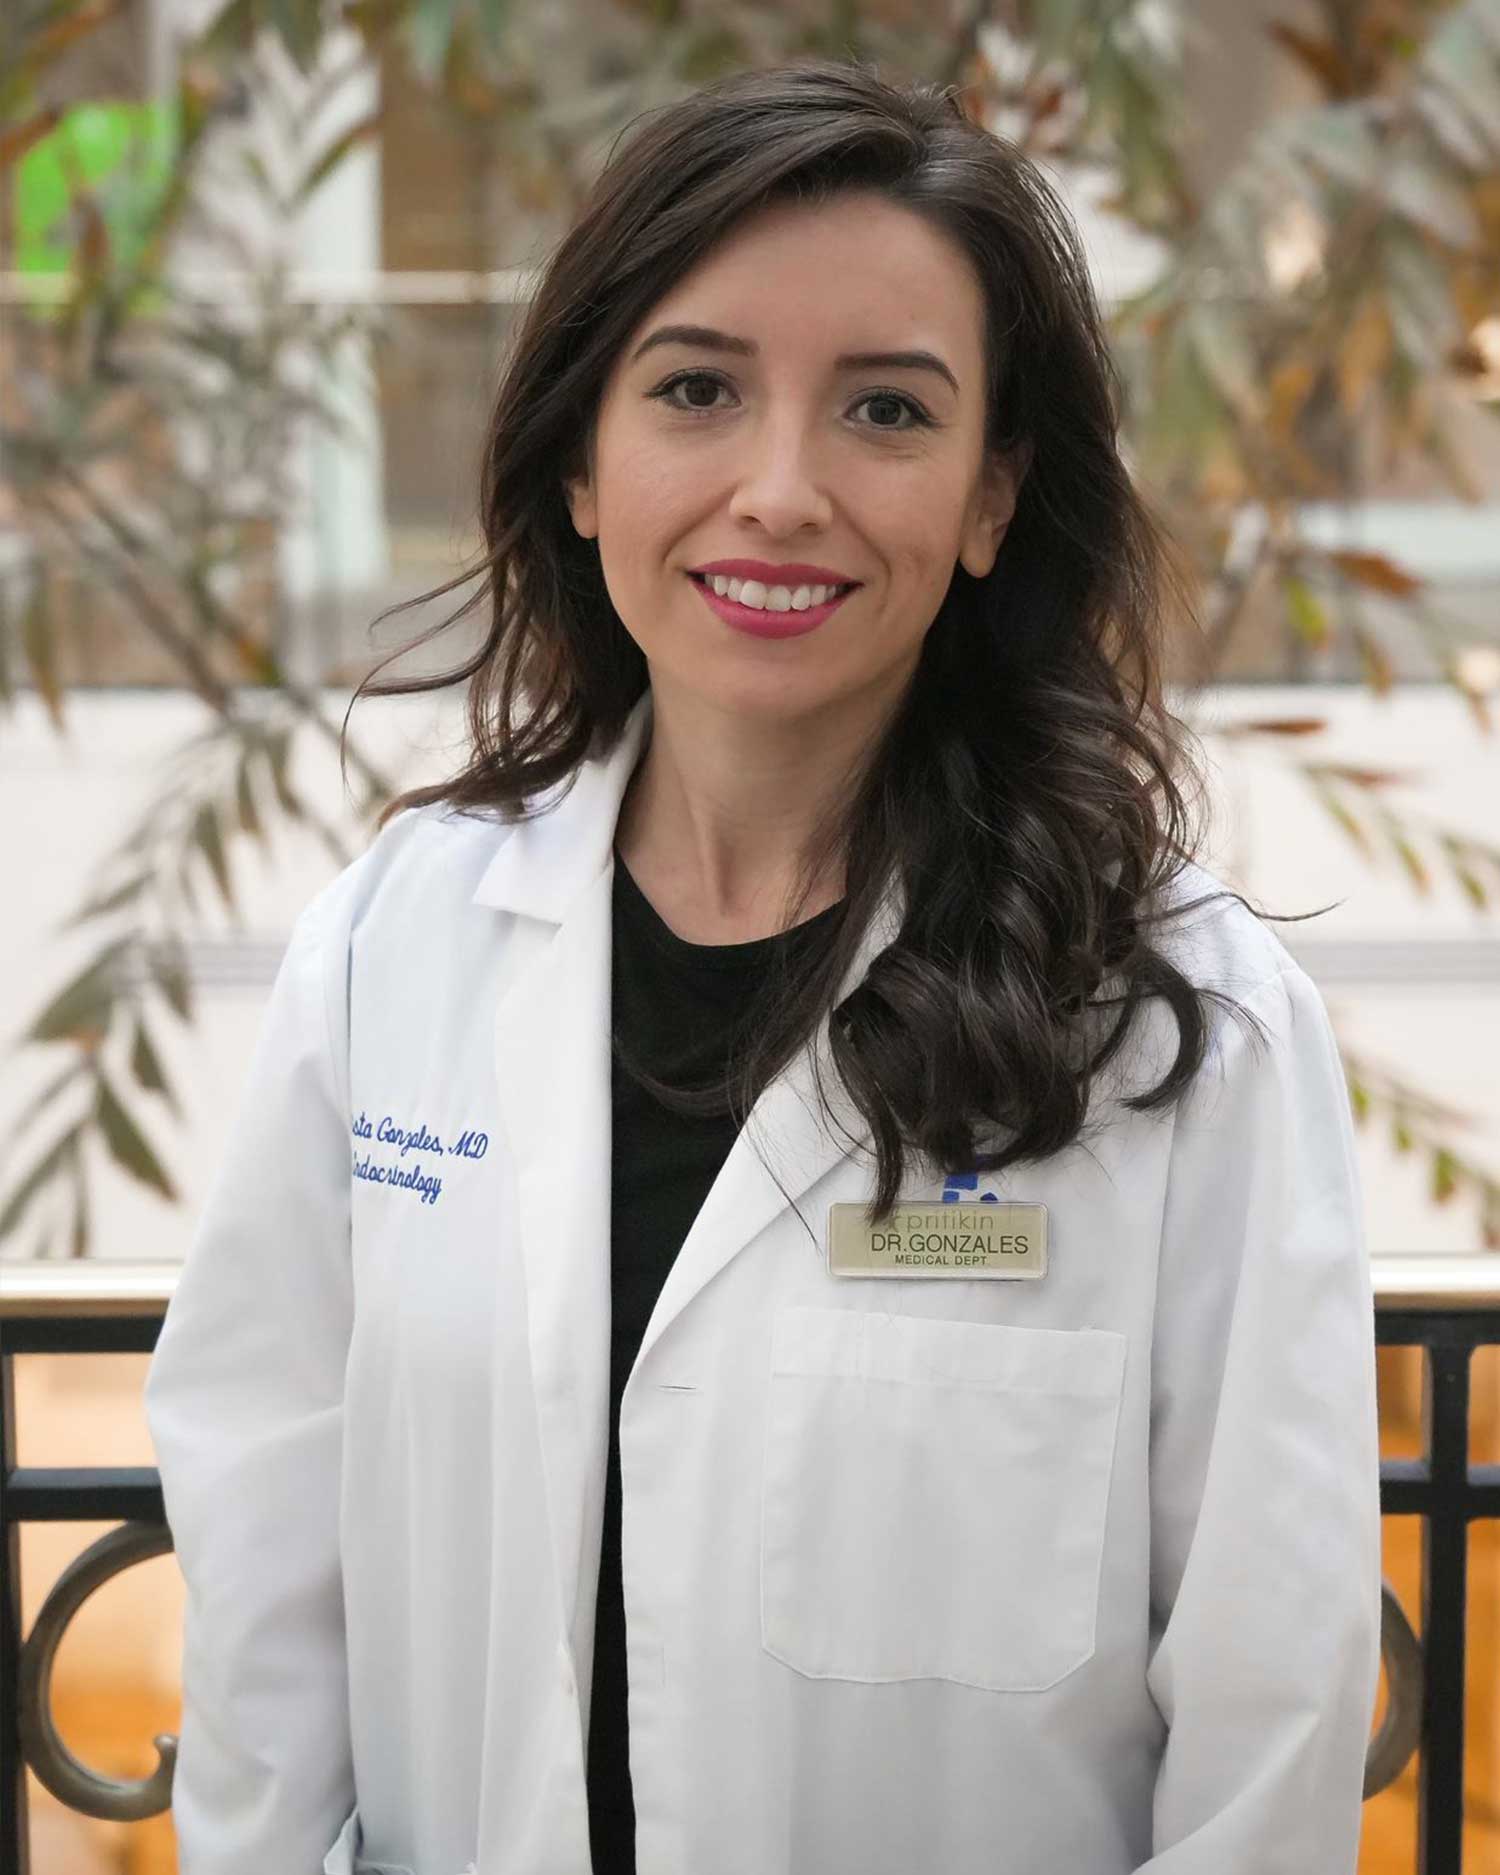 Dr. Krista Gonzalez, DO | Physician & Educator at the Pritikin Center